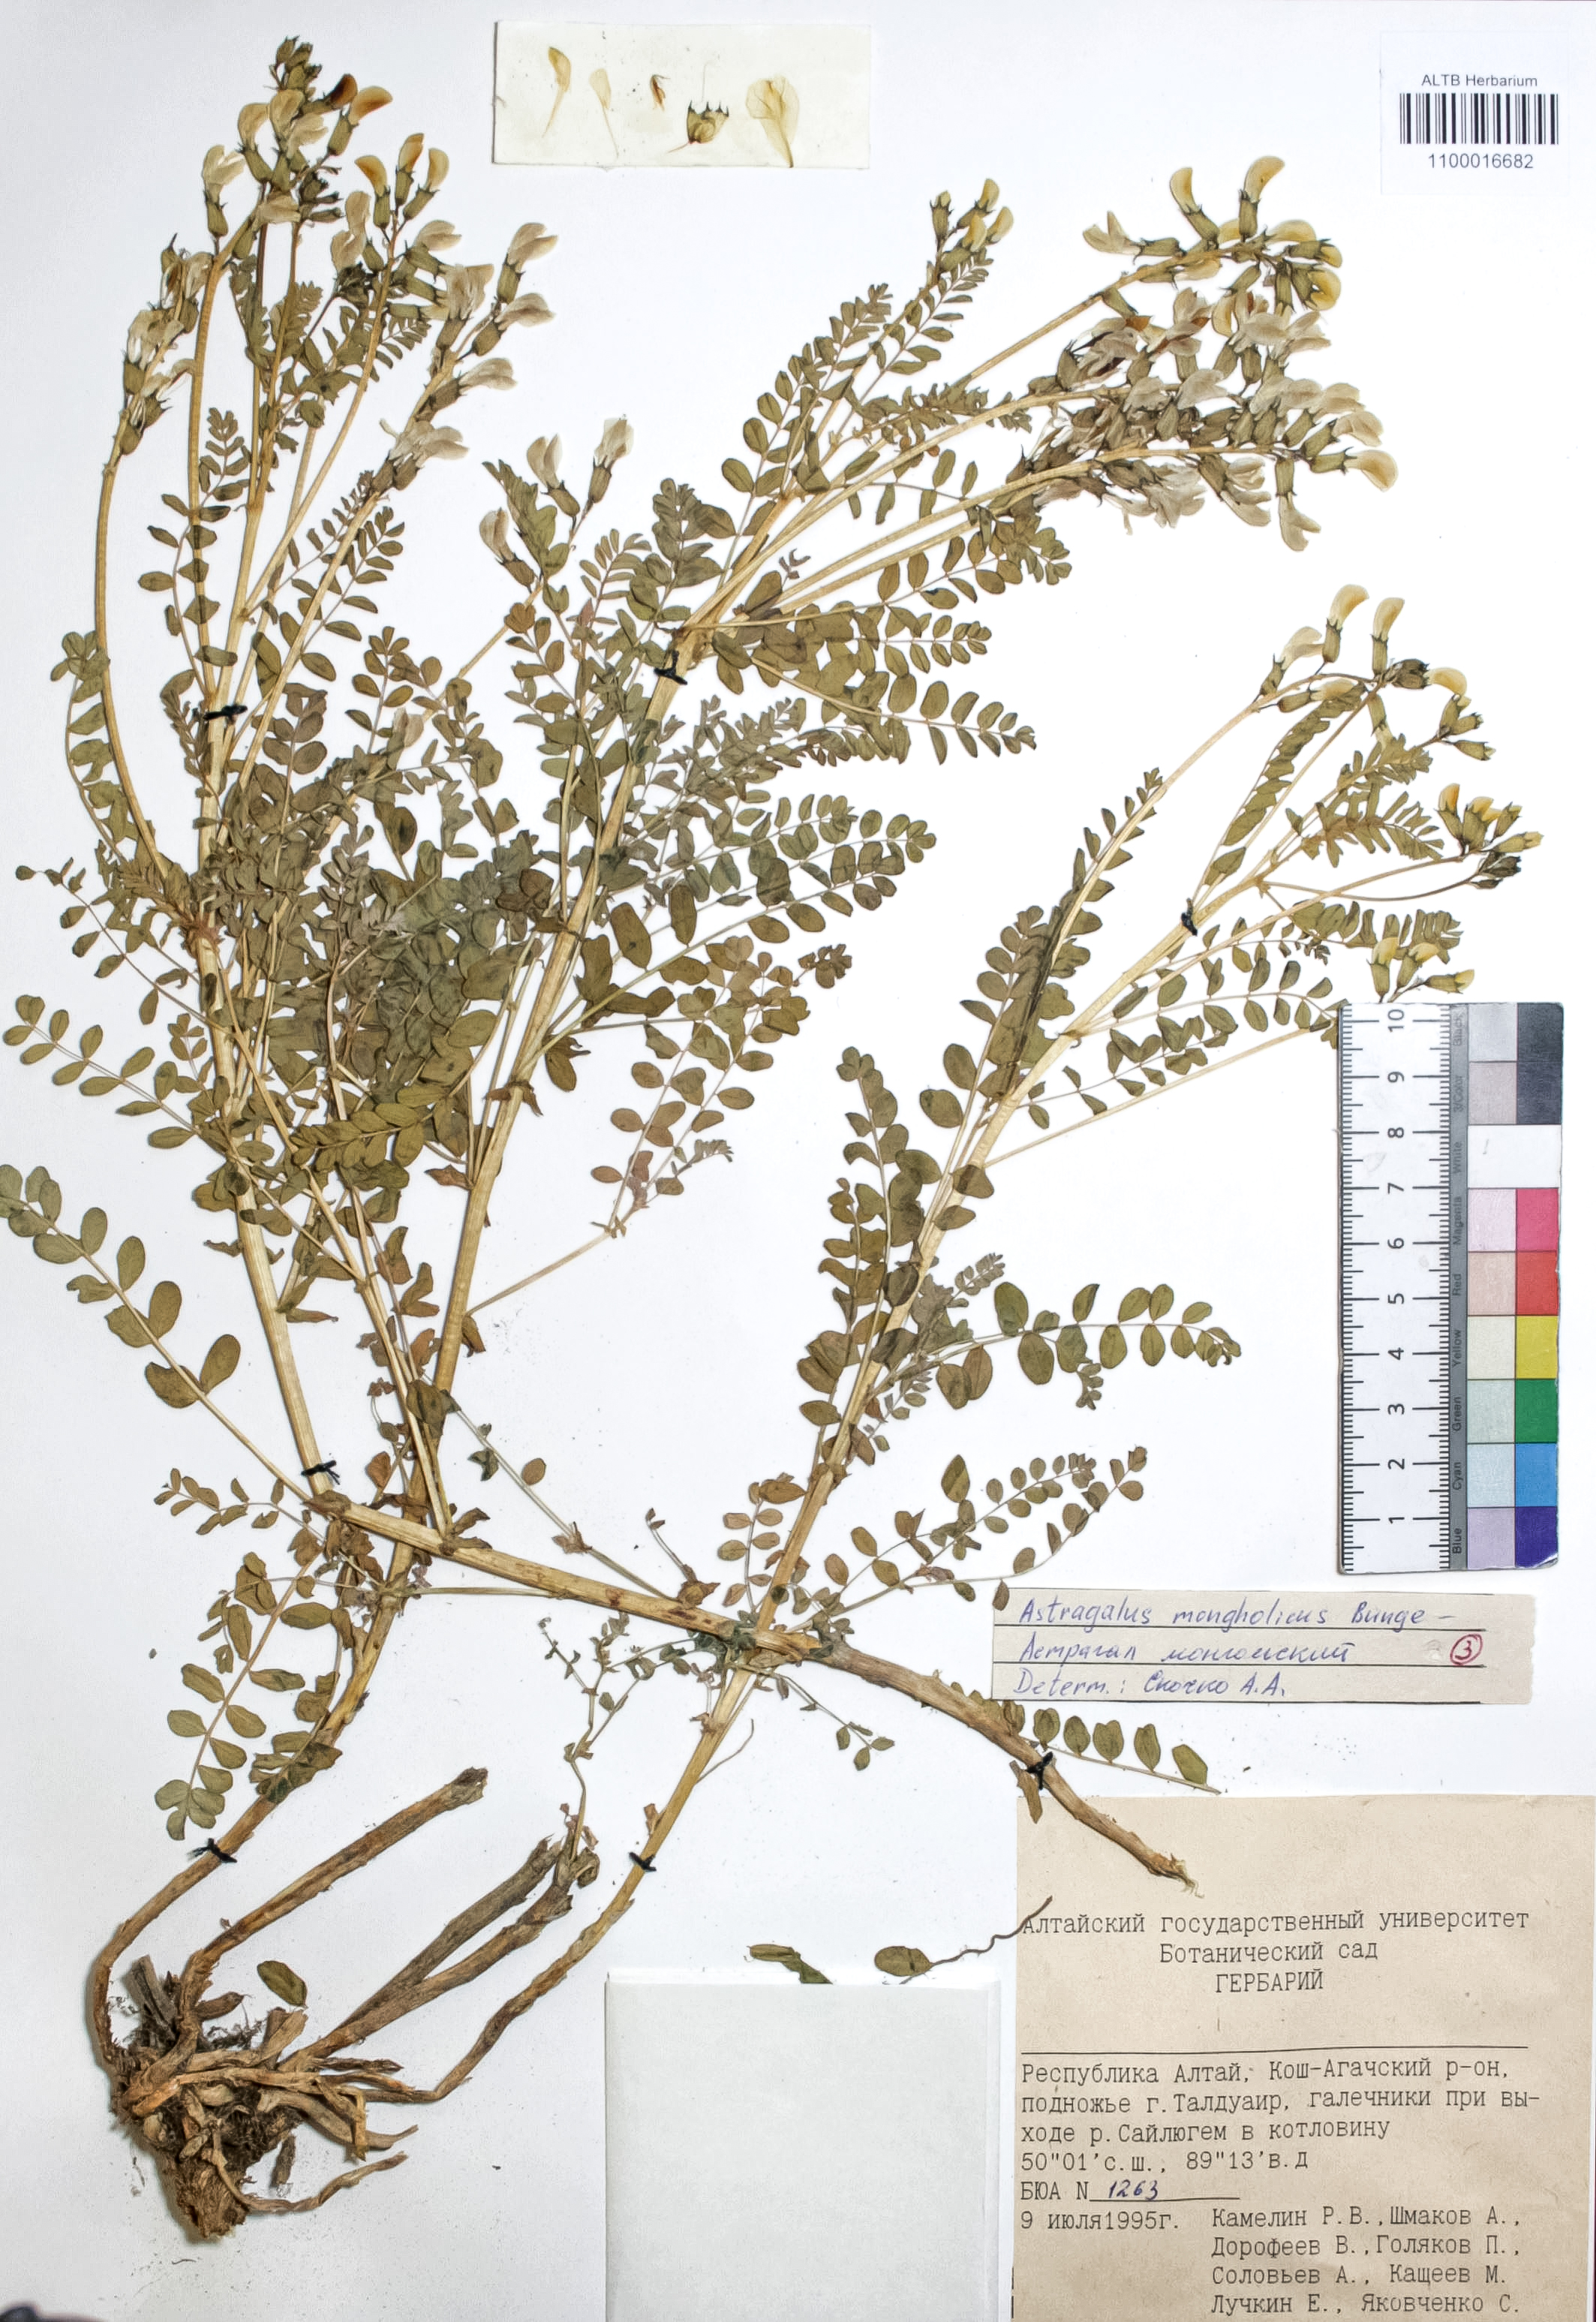 Astragalus mongolicus Bunge